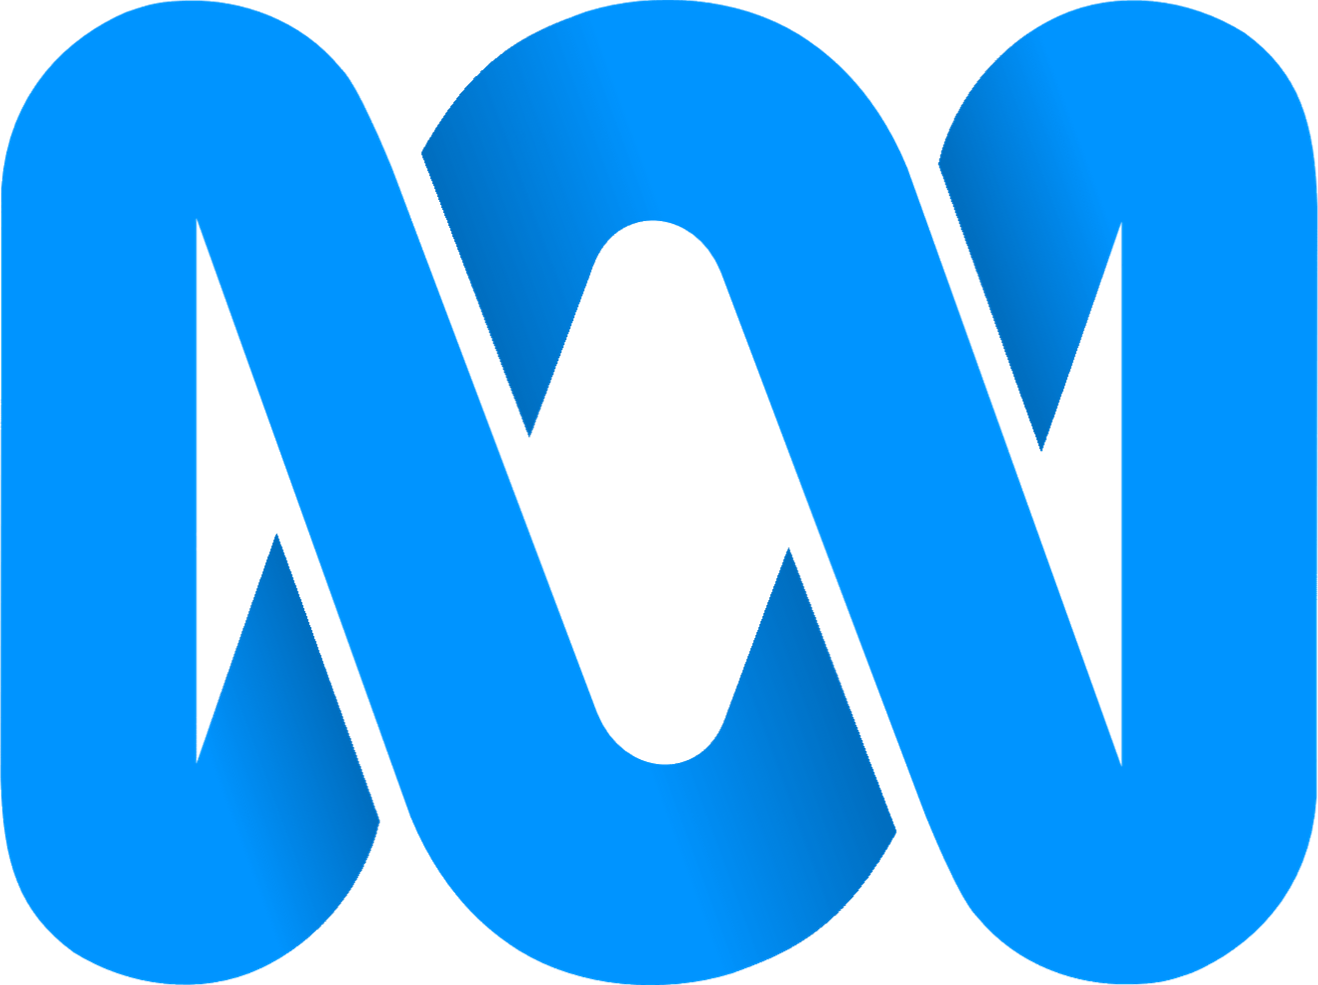 Blue ABC Logo - Image - ABC-TV 2014 blue logo.png | Logopedia | FANDOM powered by Wikia